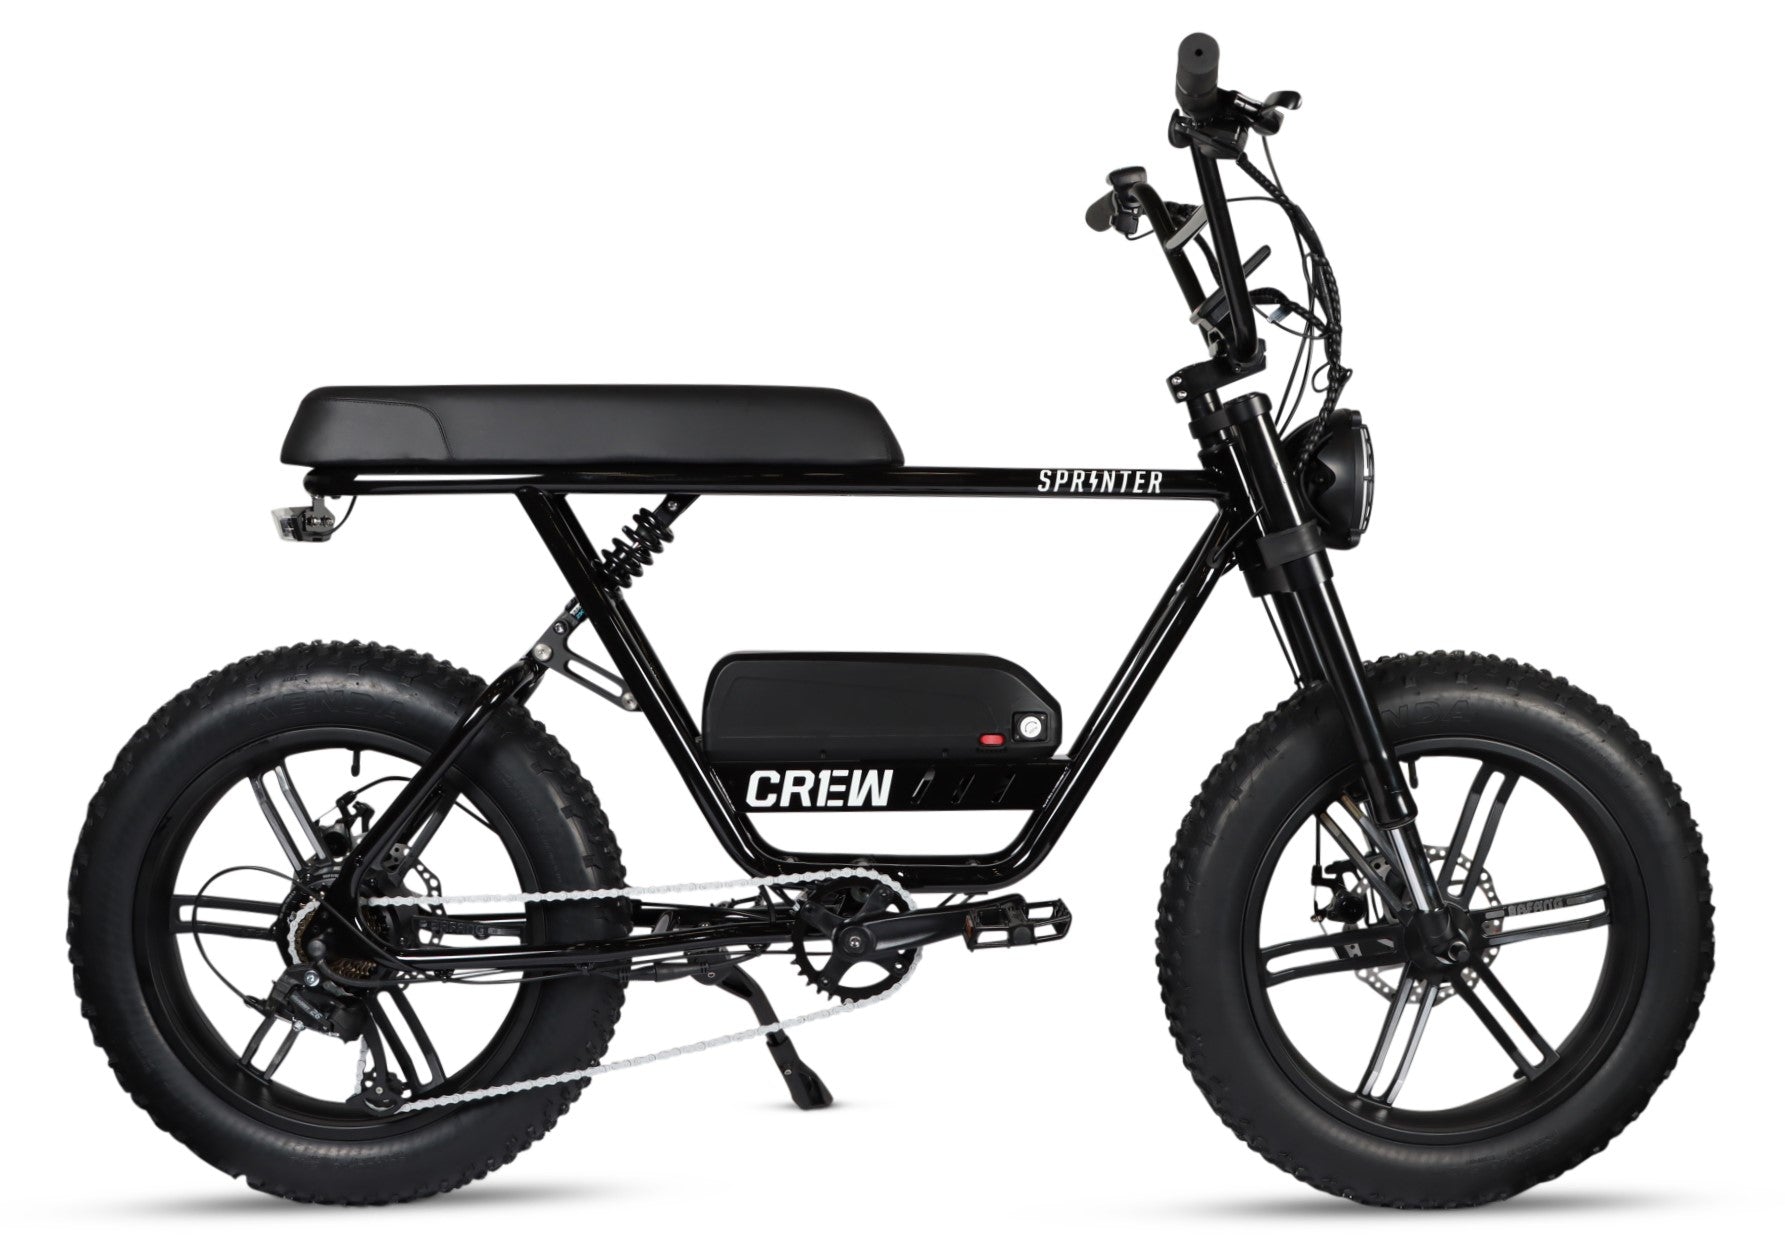 Crew Sprinter Electric Bike - Cycleson